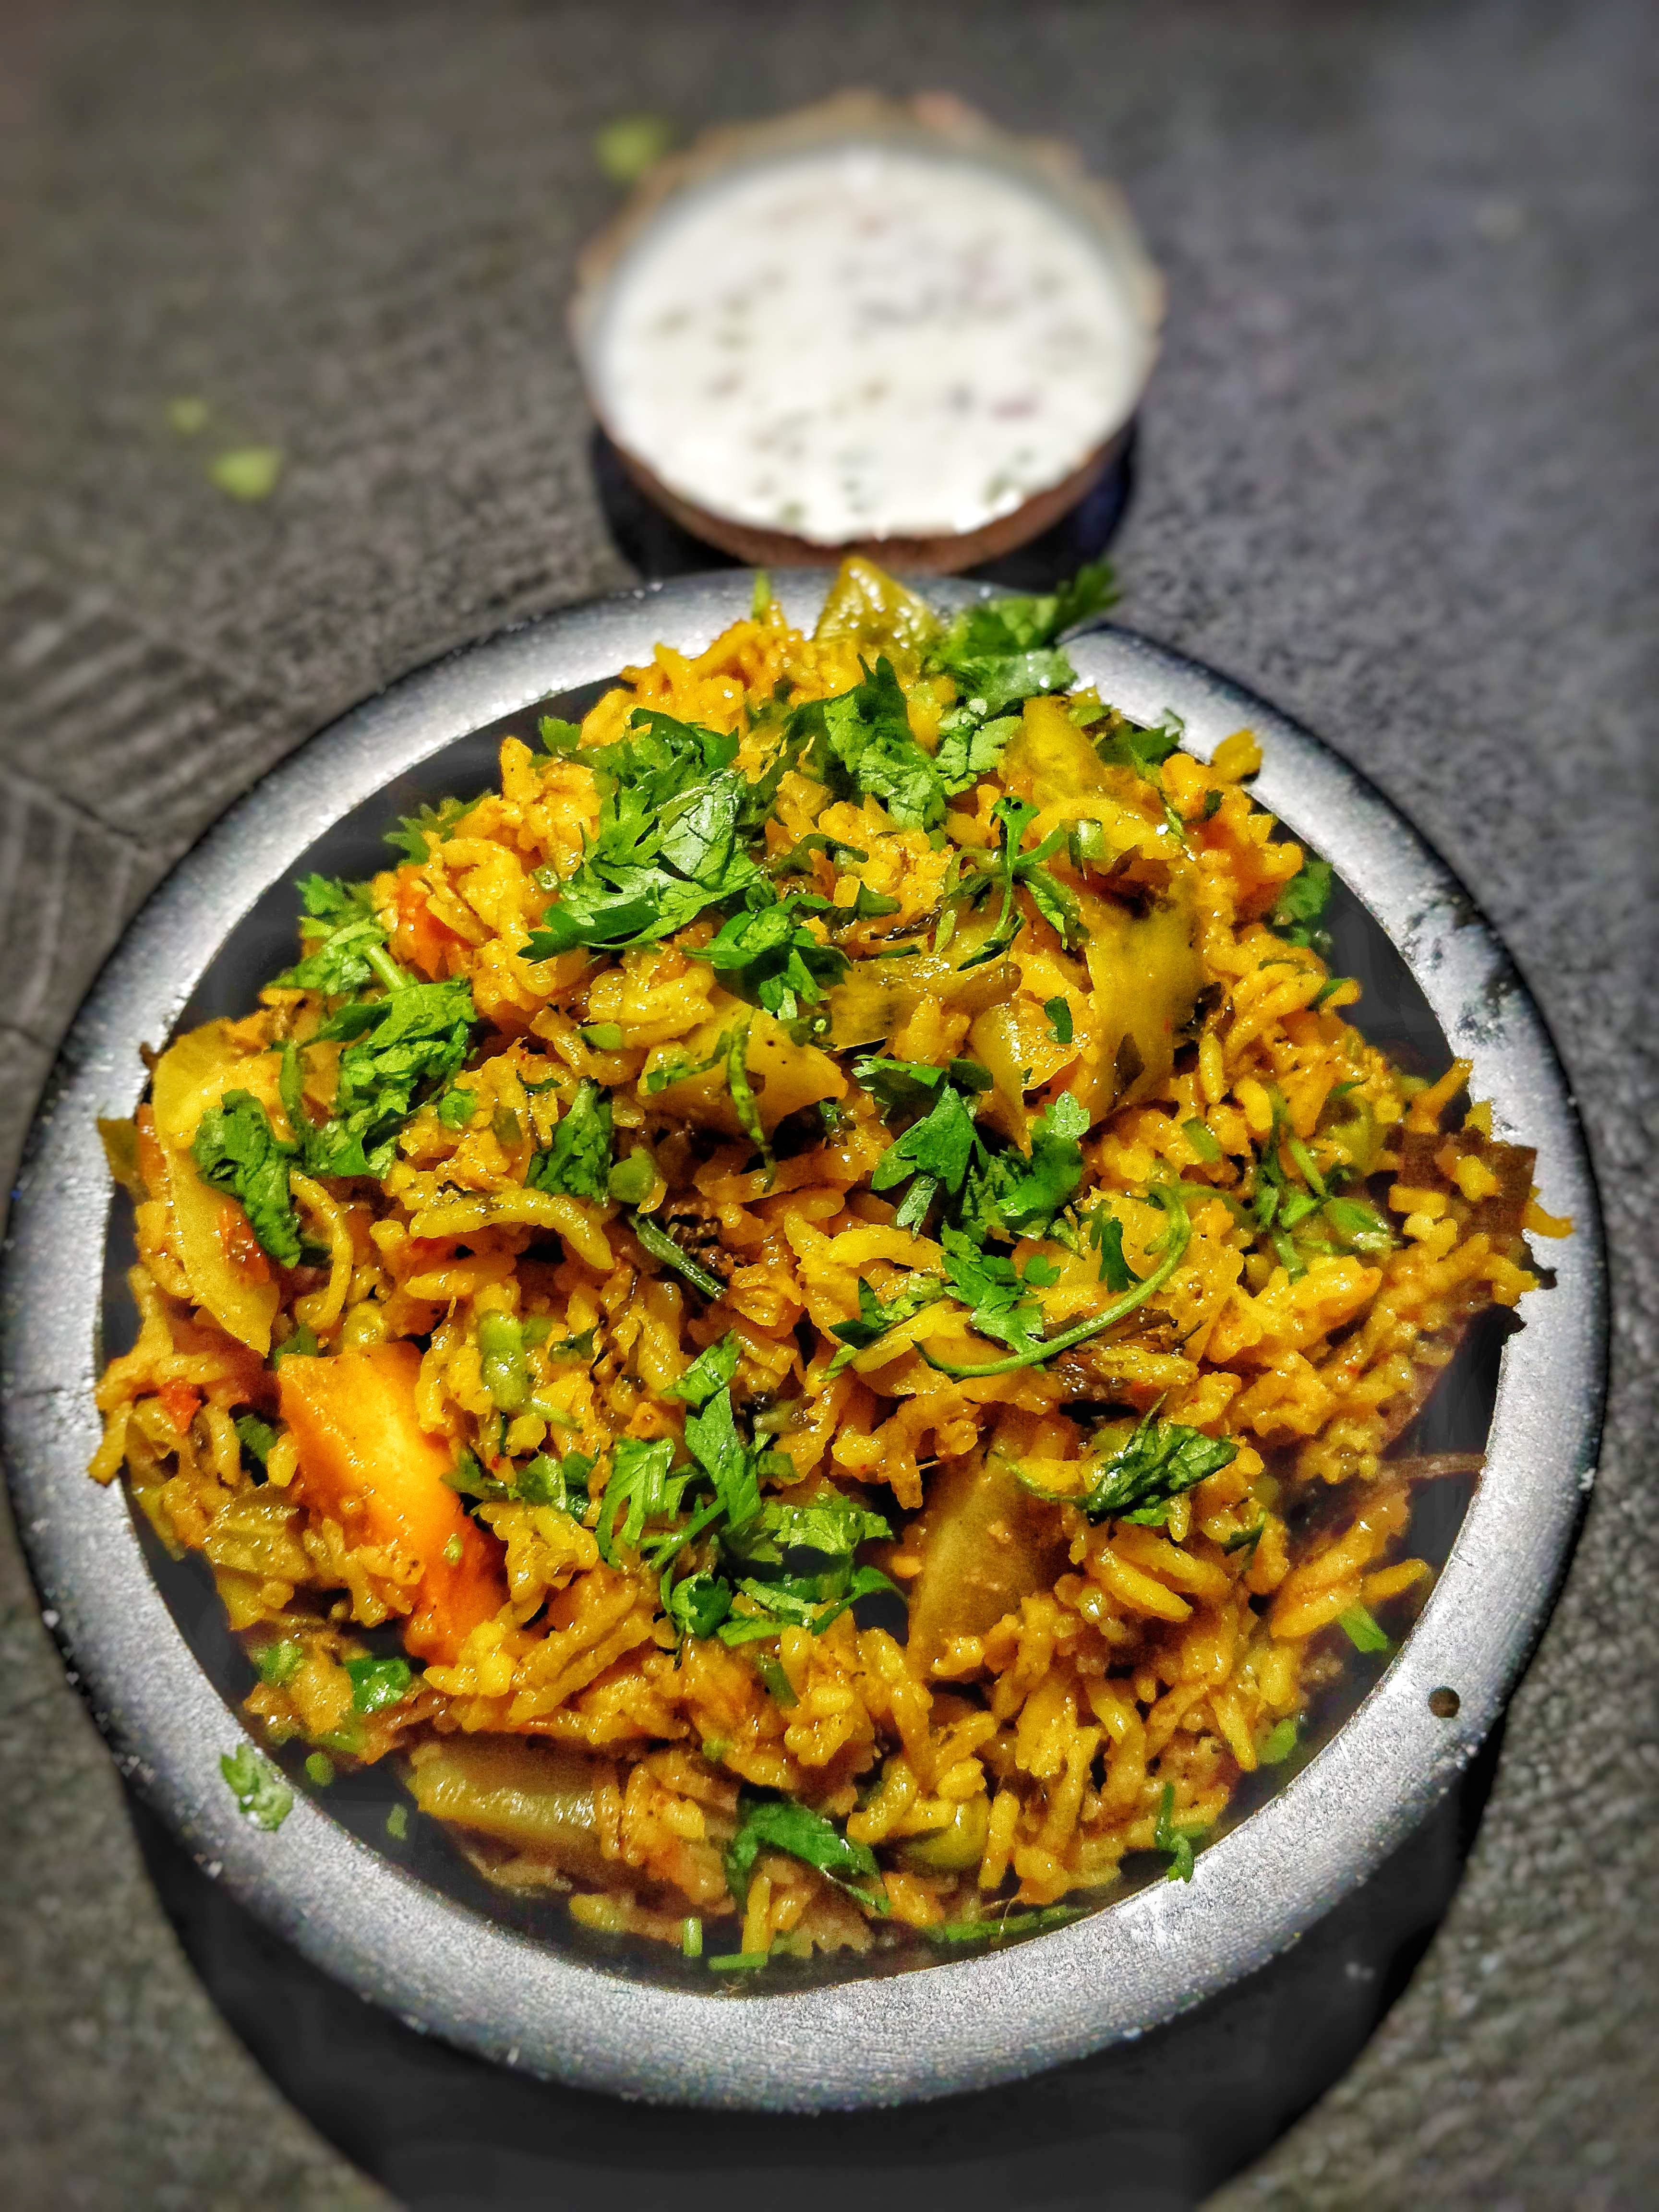 Food,Dish,Cuisine,Ingredient,Recipe,Produce,Curry,Indian cuisine,Masala,Side dish